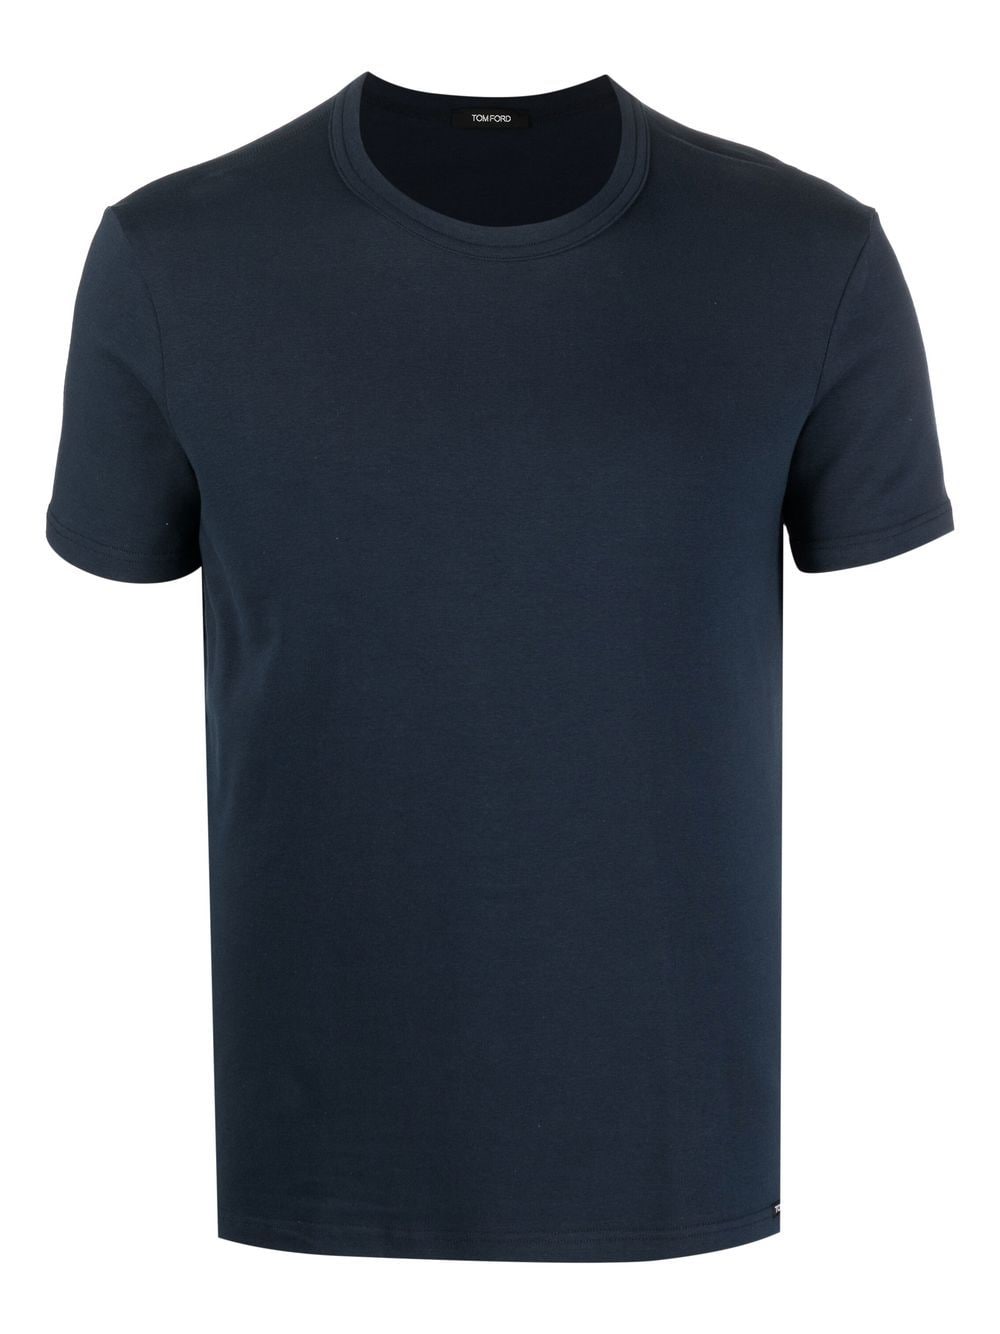 Image 1 of TOM FORD T-shirt girocollo